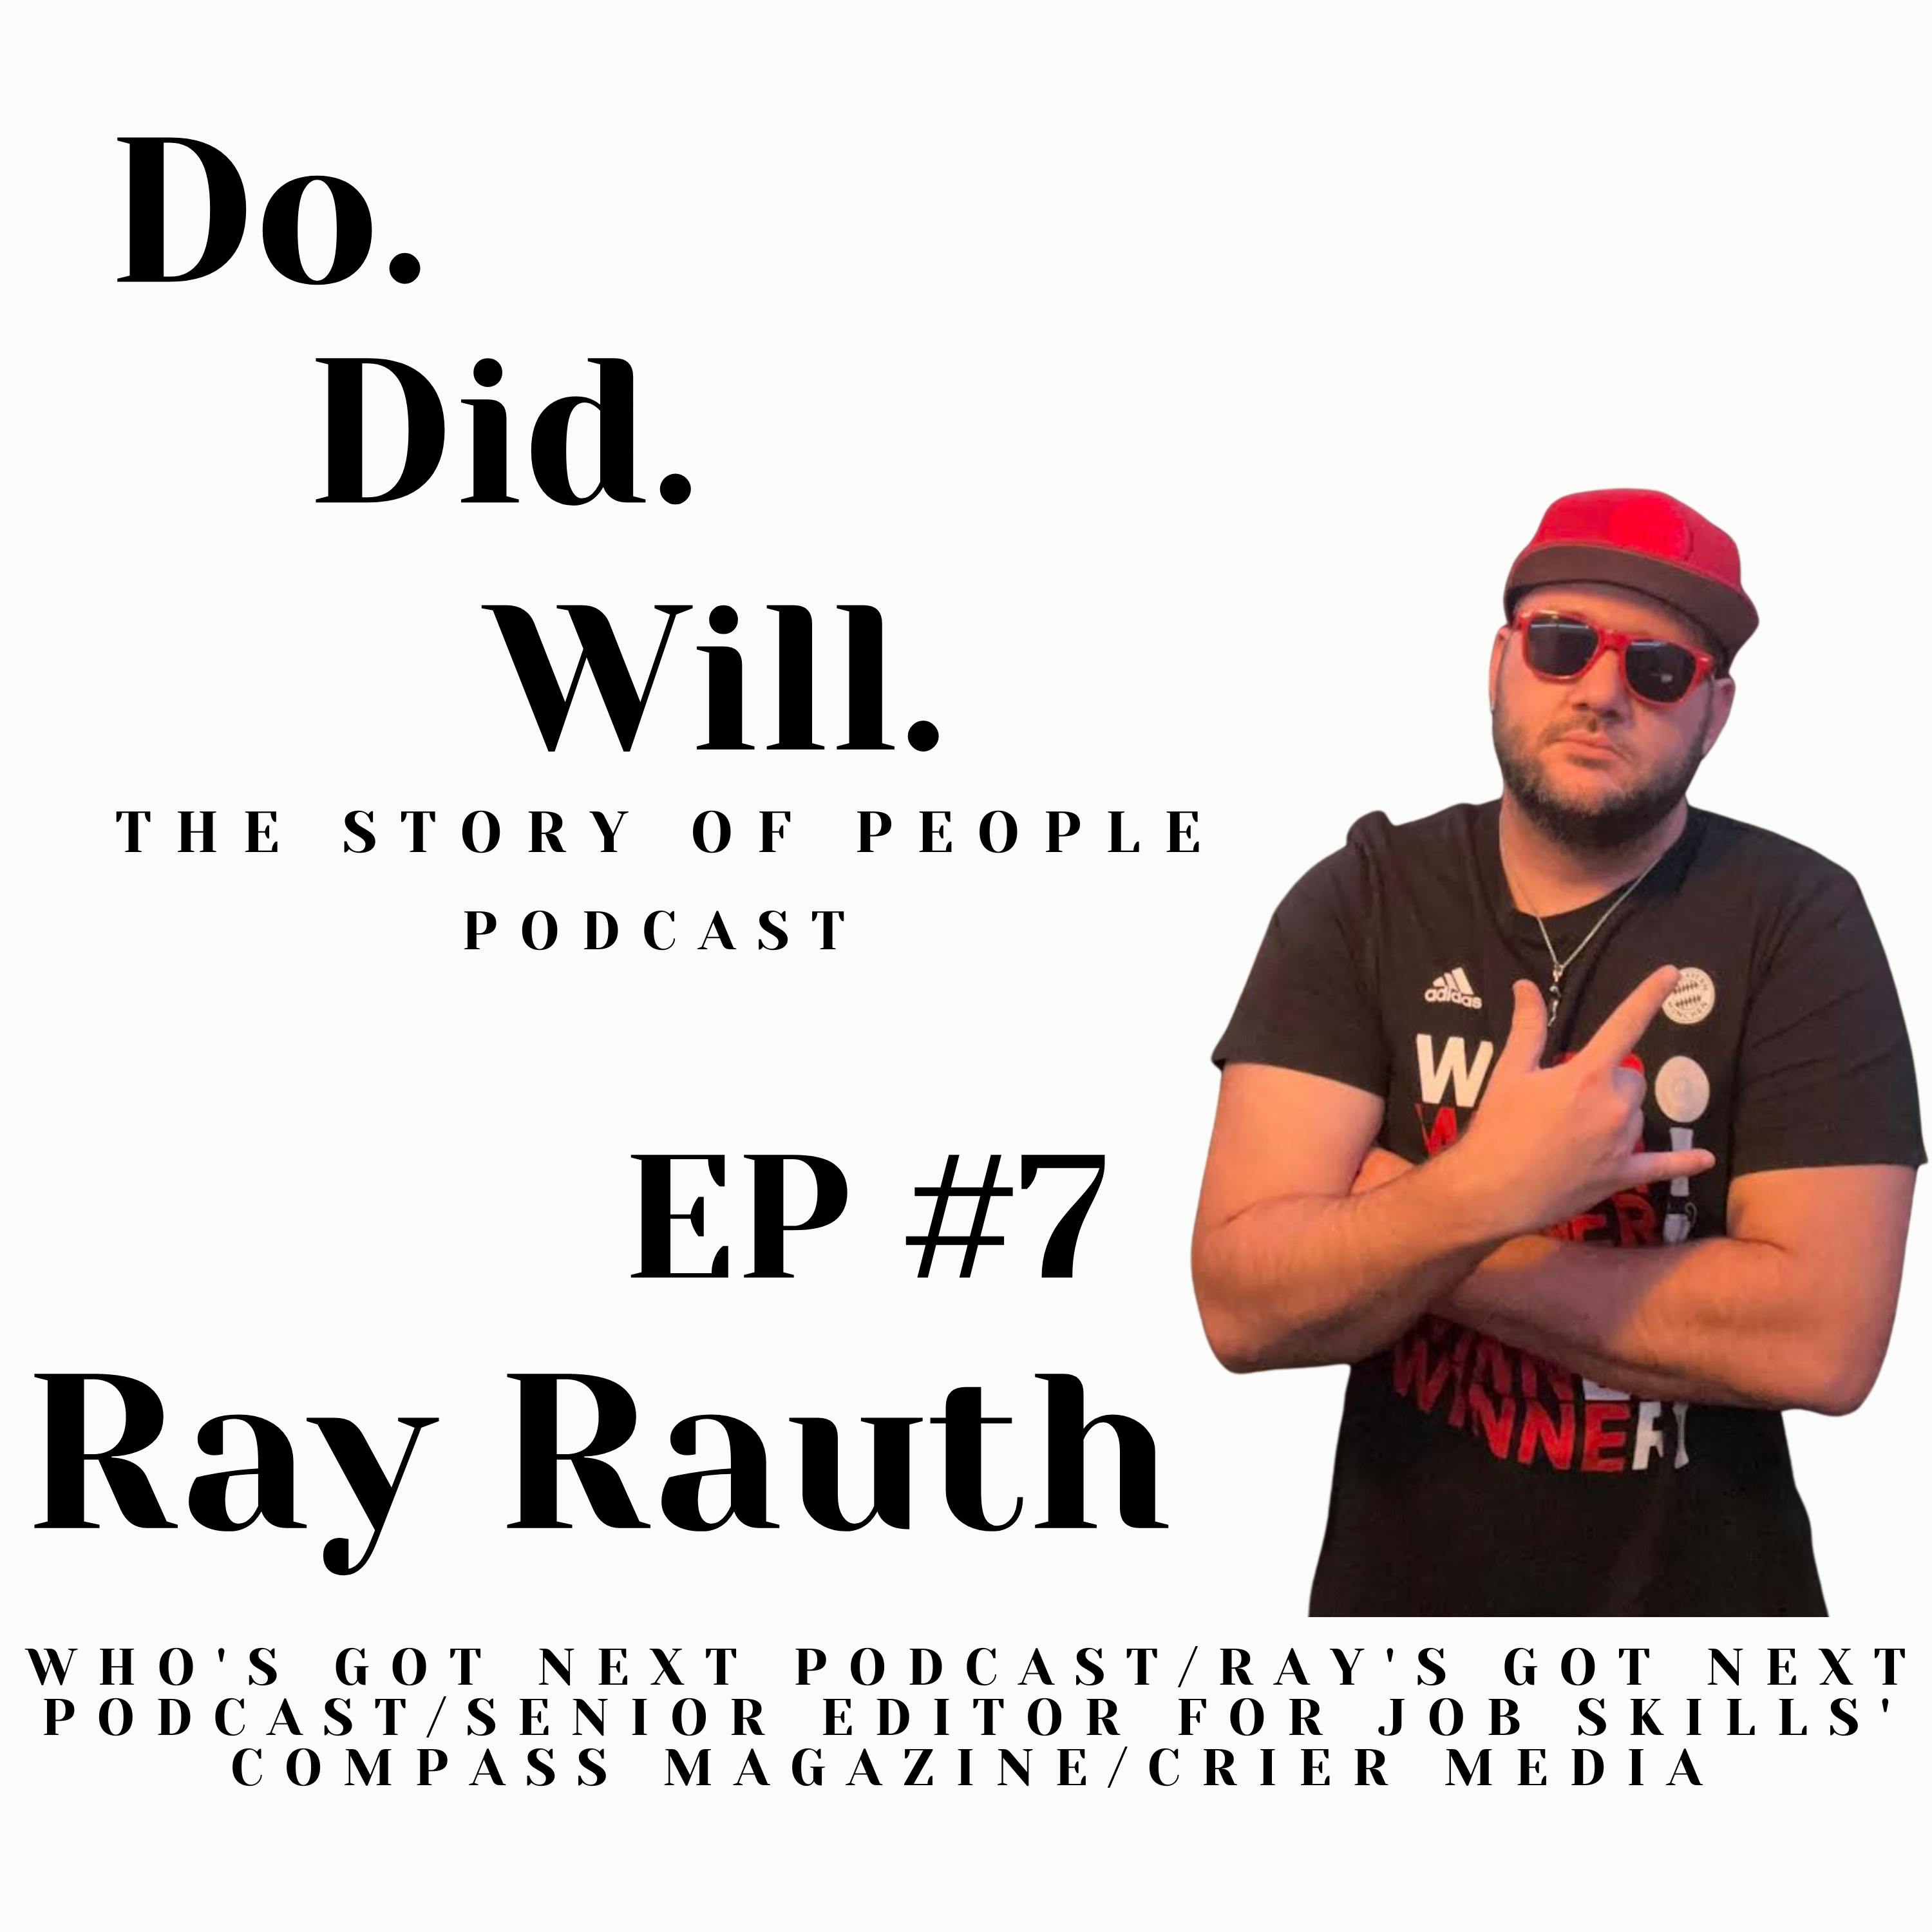 Ray Rauth (Who’s Got Next/Ray’s Got Next Podcast, JobSkills.Org/Compass Magazine, Crier Media)